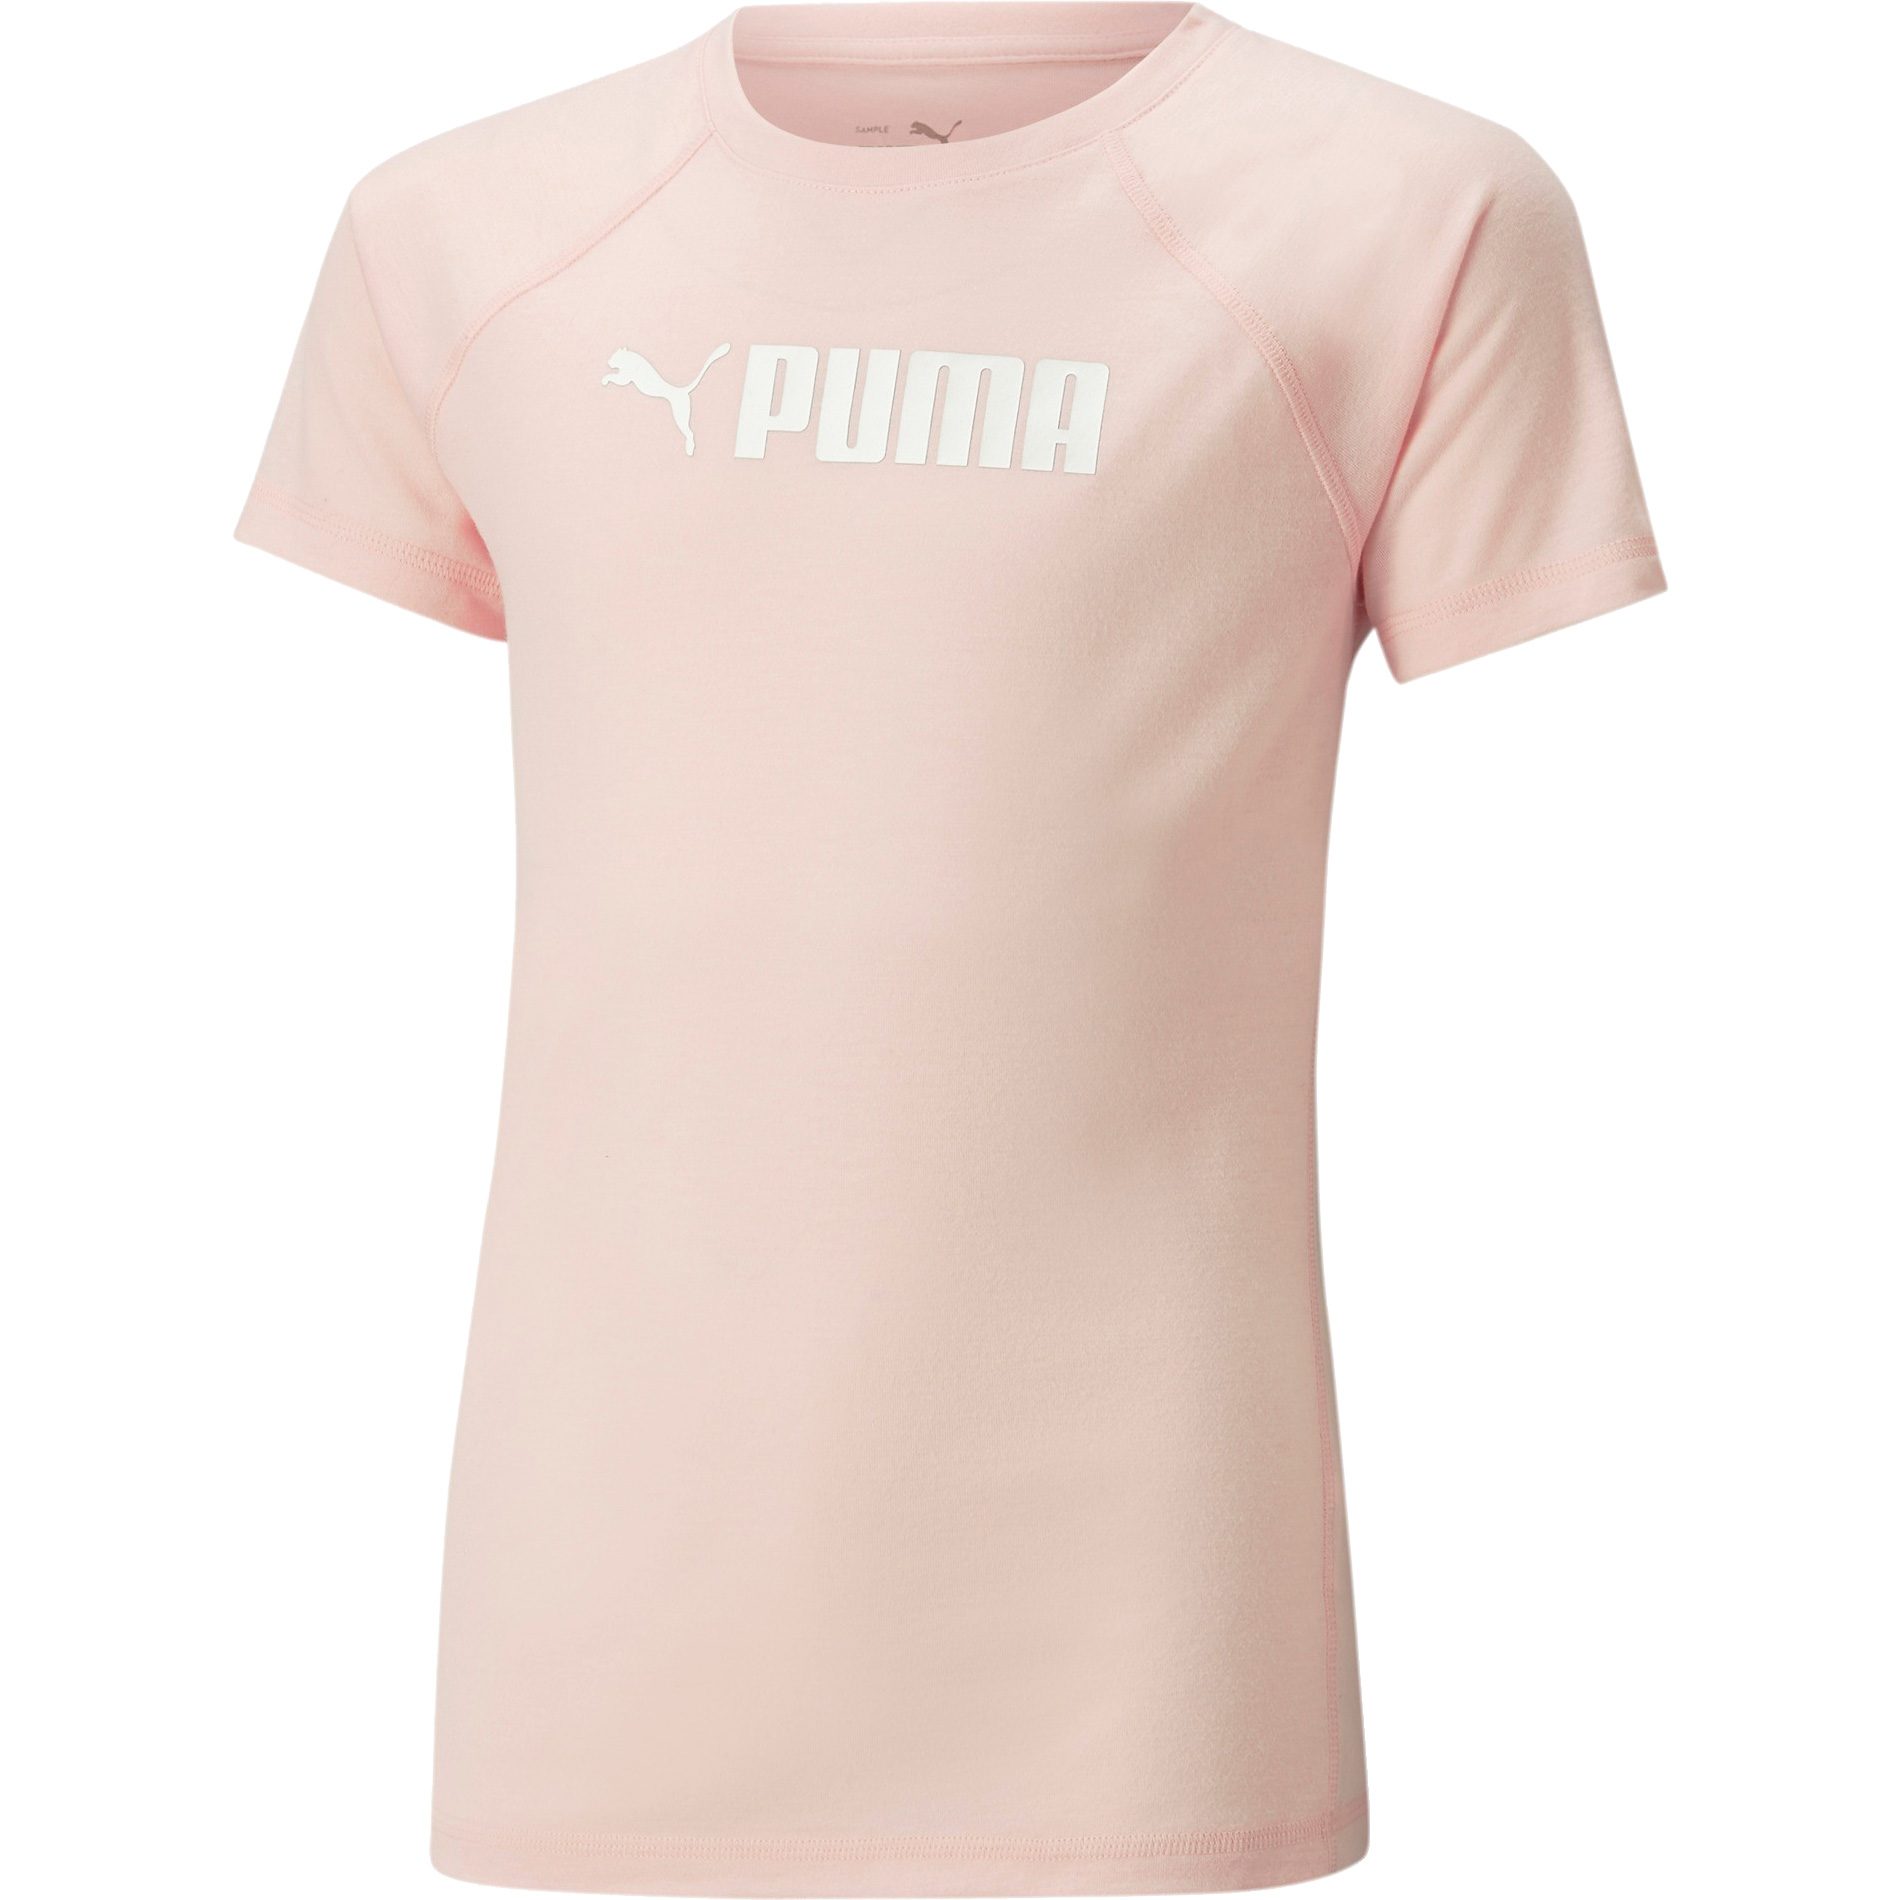 Puma - Fit rose T-shirt Bittl at dust Sport Shop Girls